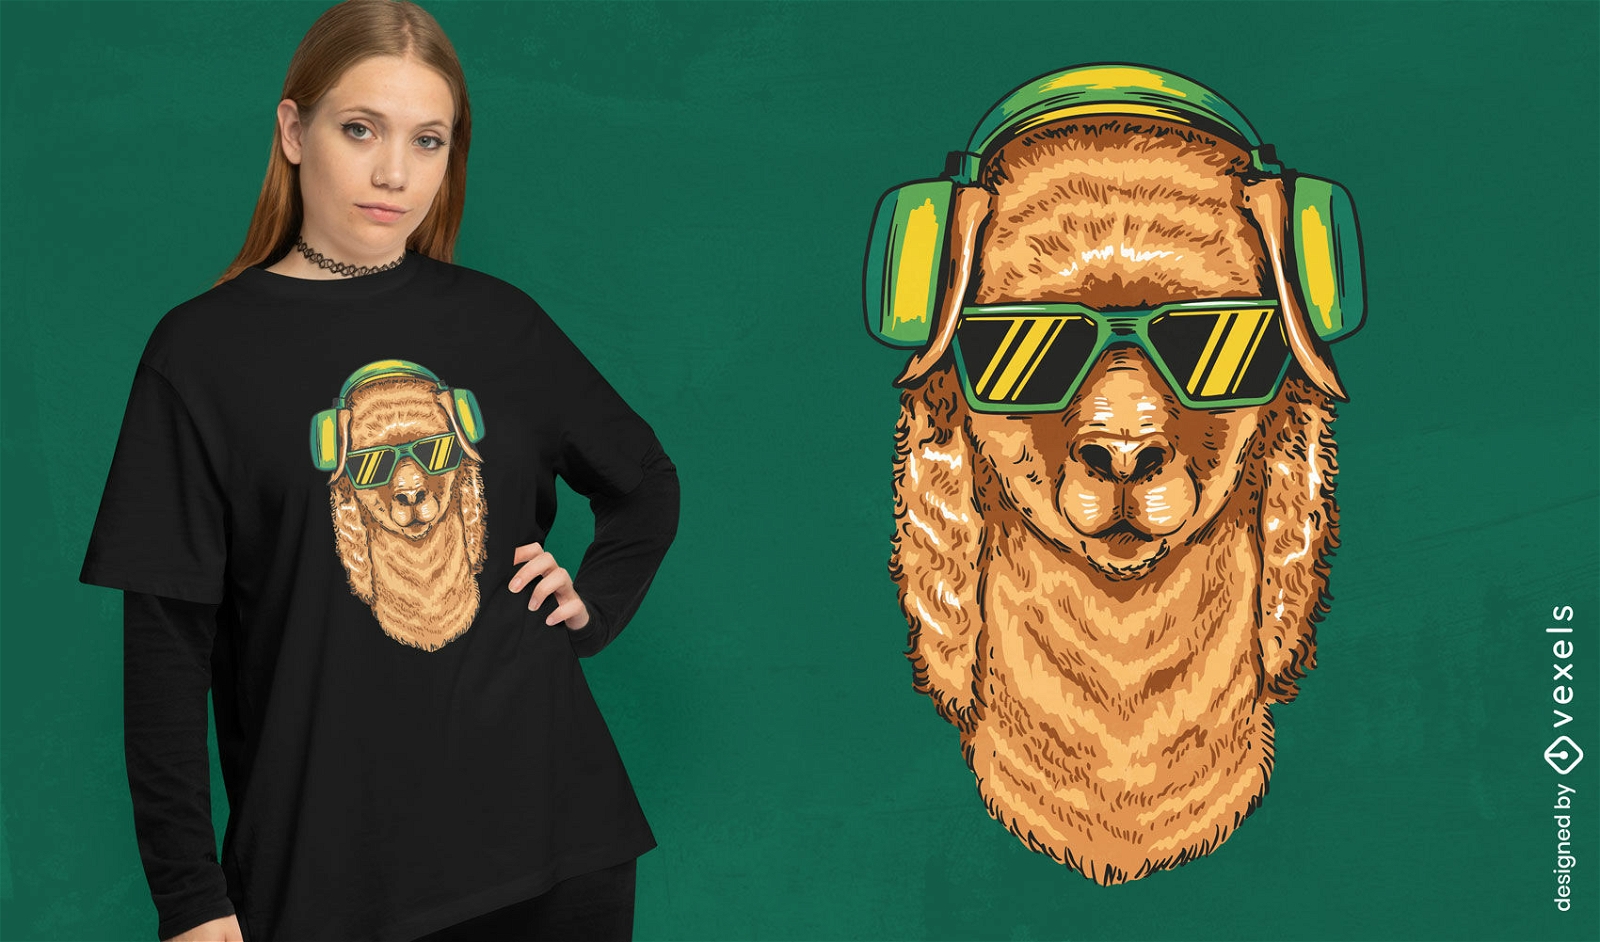 Cool alpaca with sunglasses t-shirt design